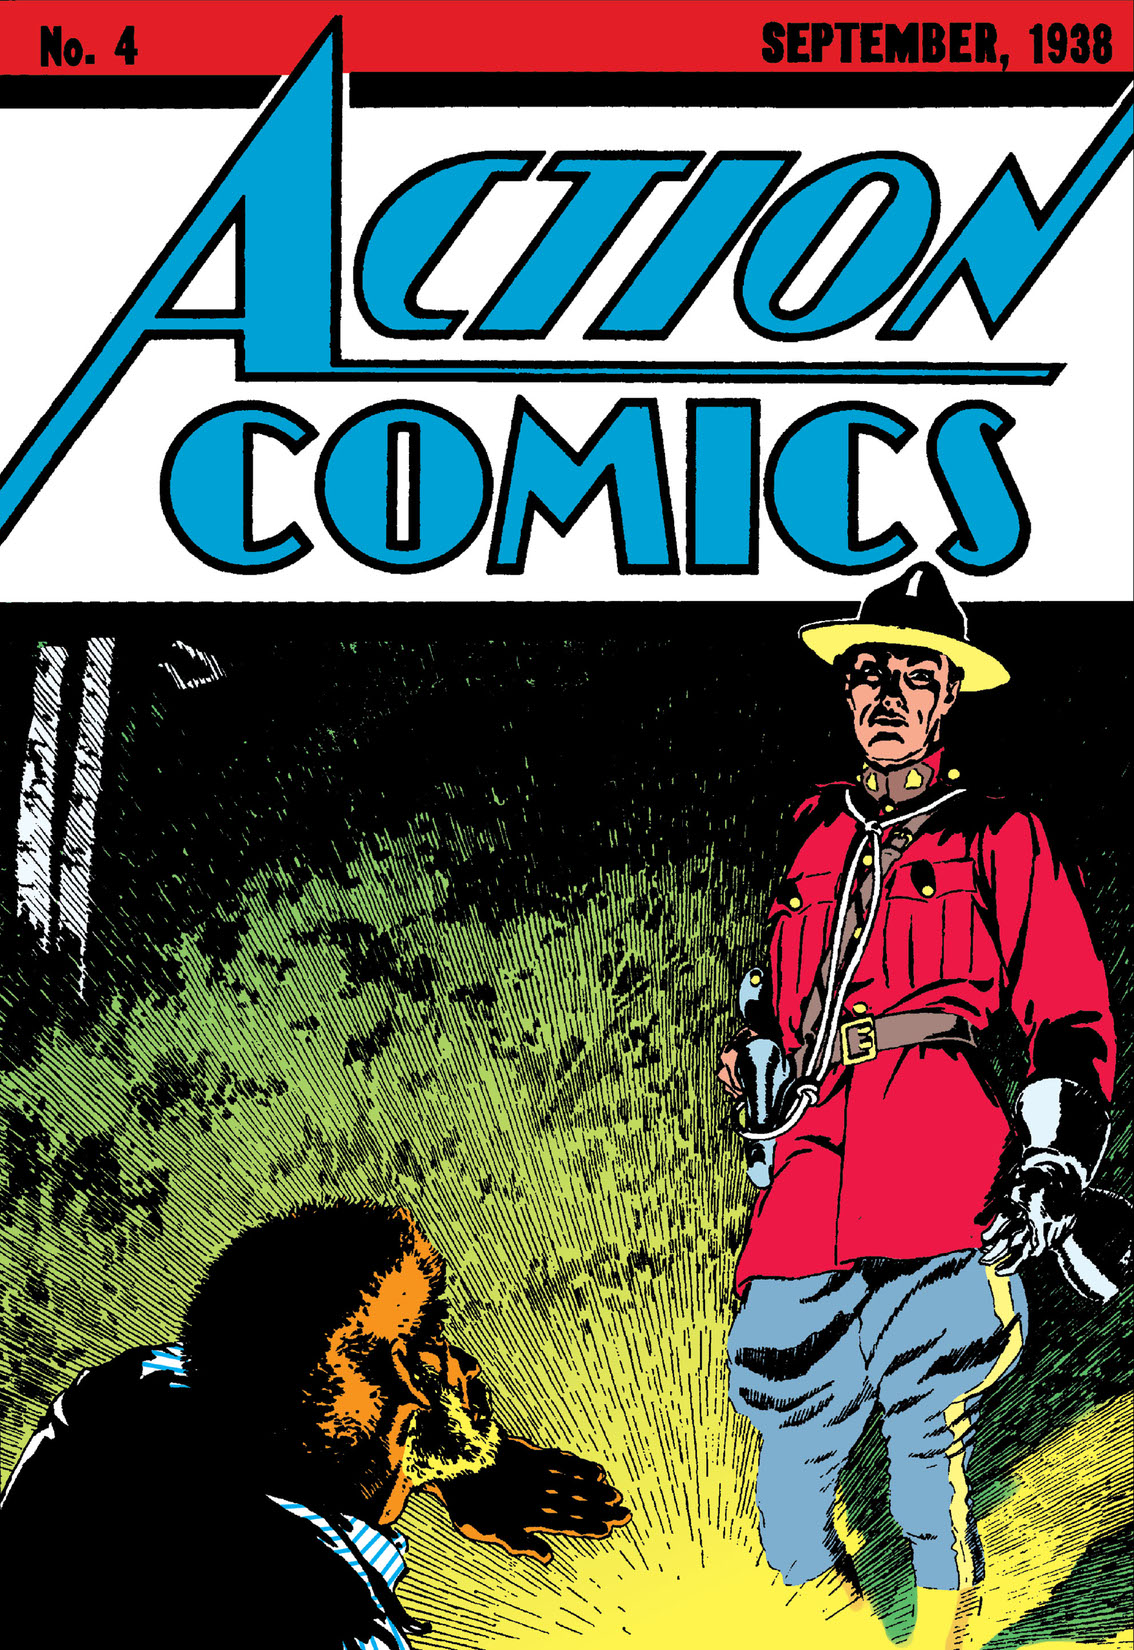 Action Comics (1938-) #4 preview images